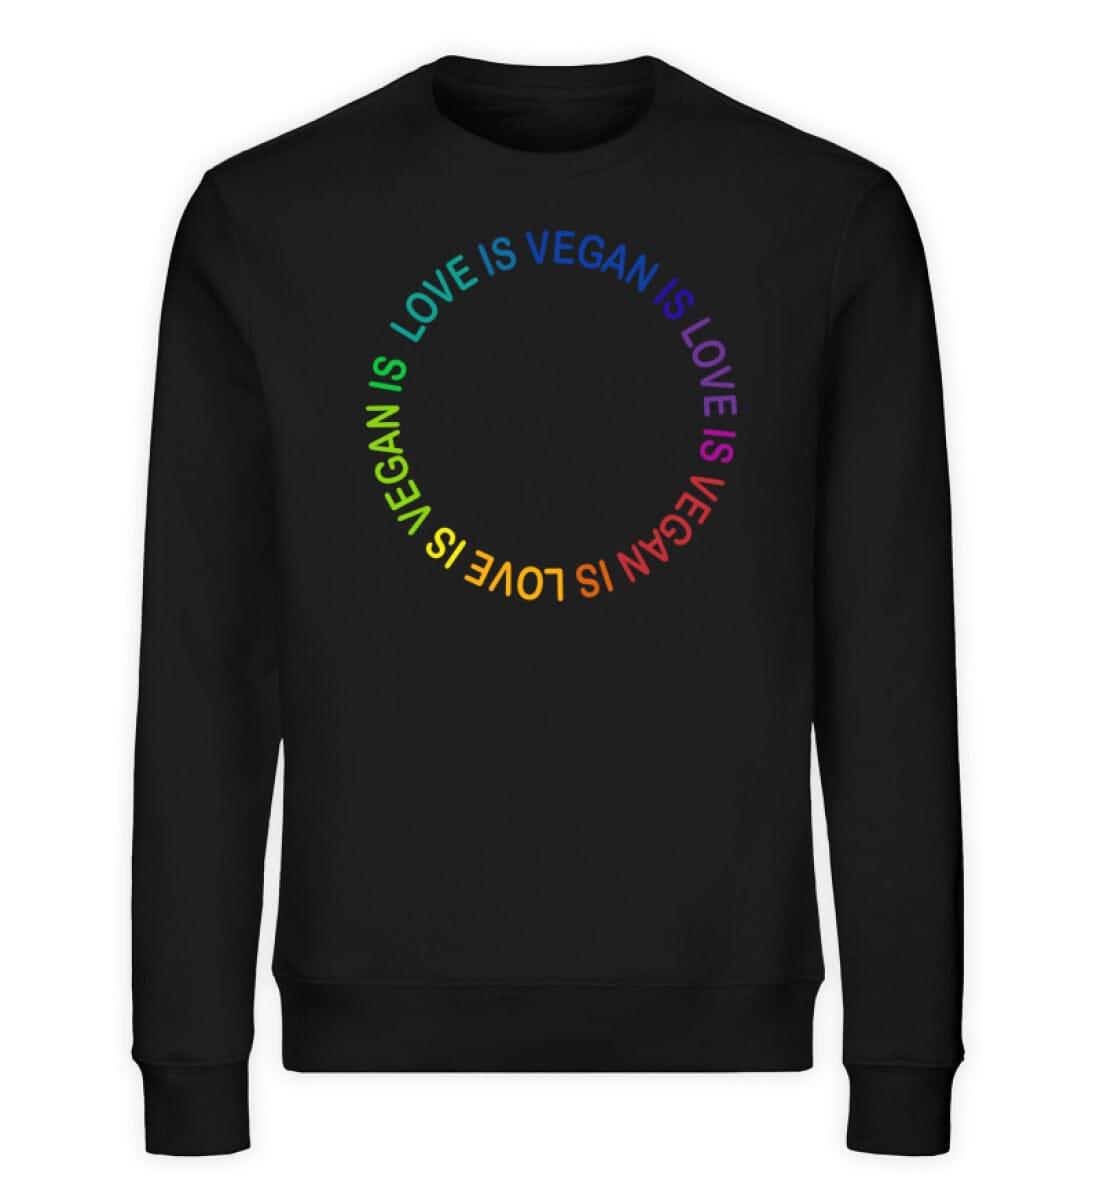 Vegan is love - Unisex Organic Sweatshirt - Team Vegan © vegan t shirt